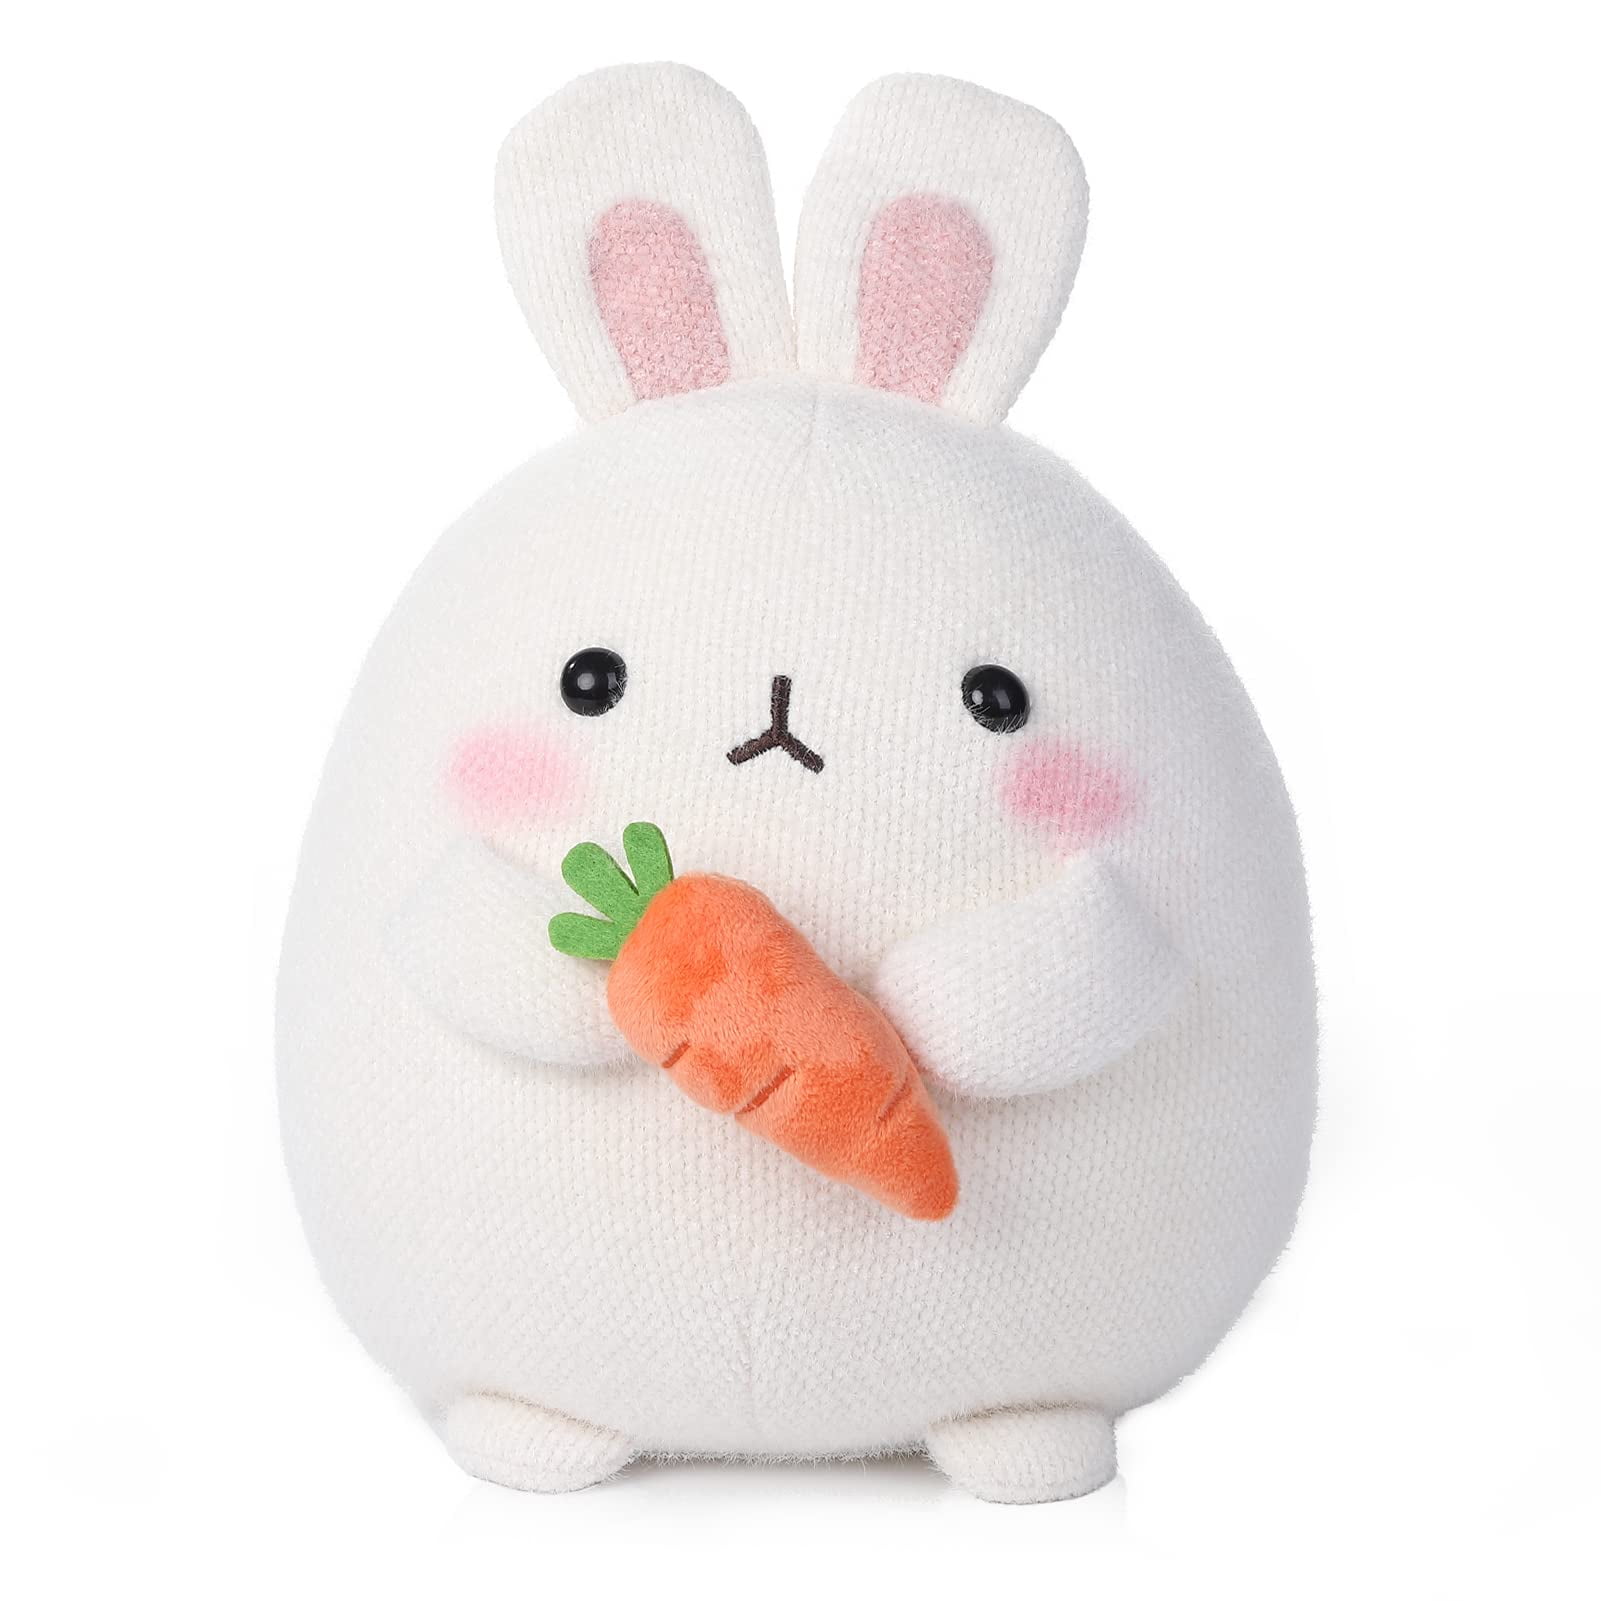 Stuffed Animal Decorations Fashion Design Small Lovely Cute Rabbit